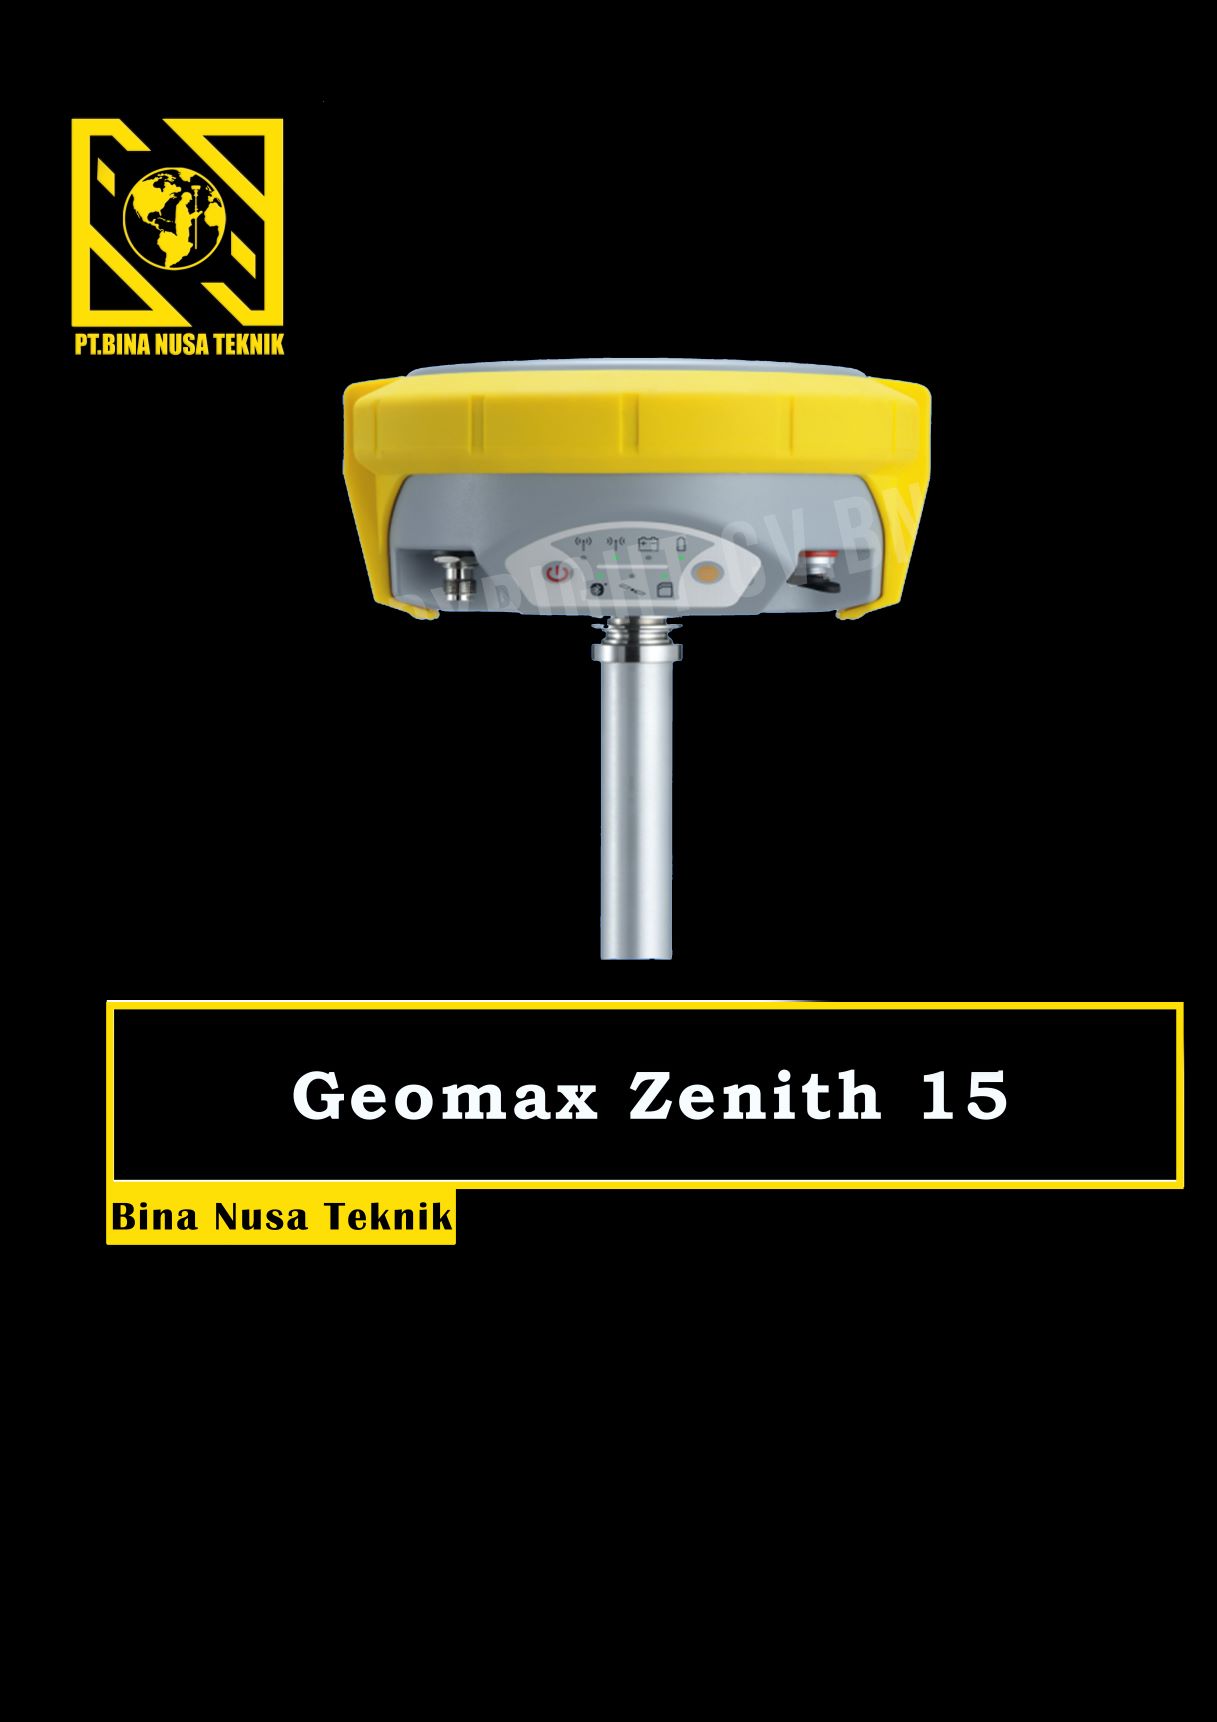 gps rtk gnss geomax zenith 15